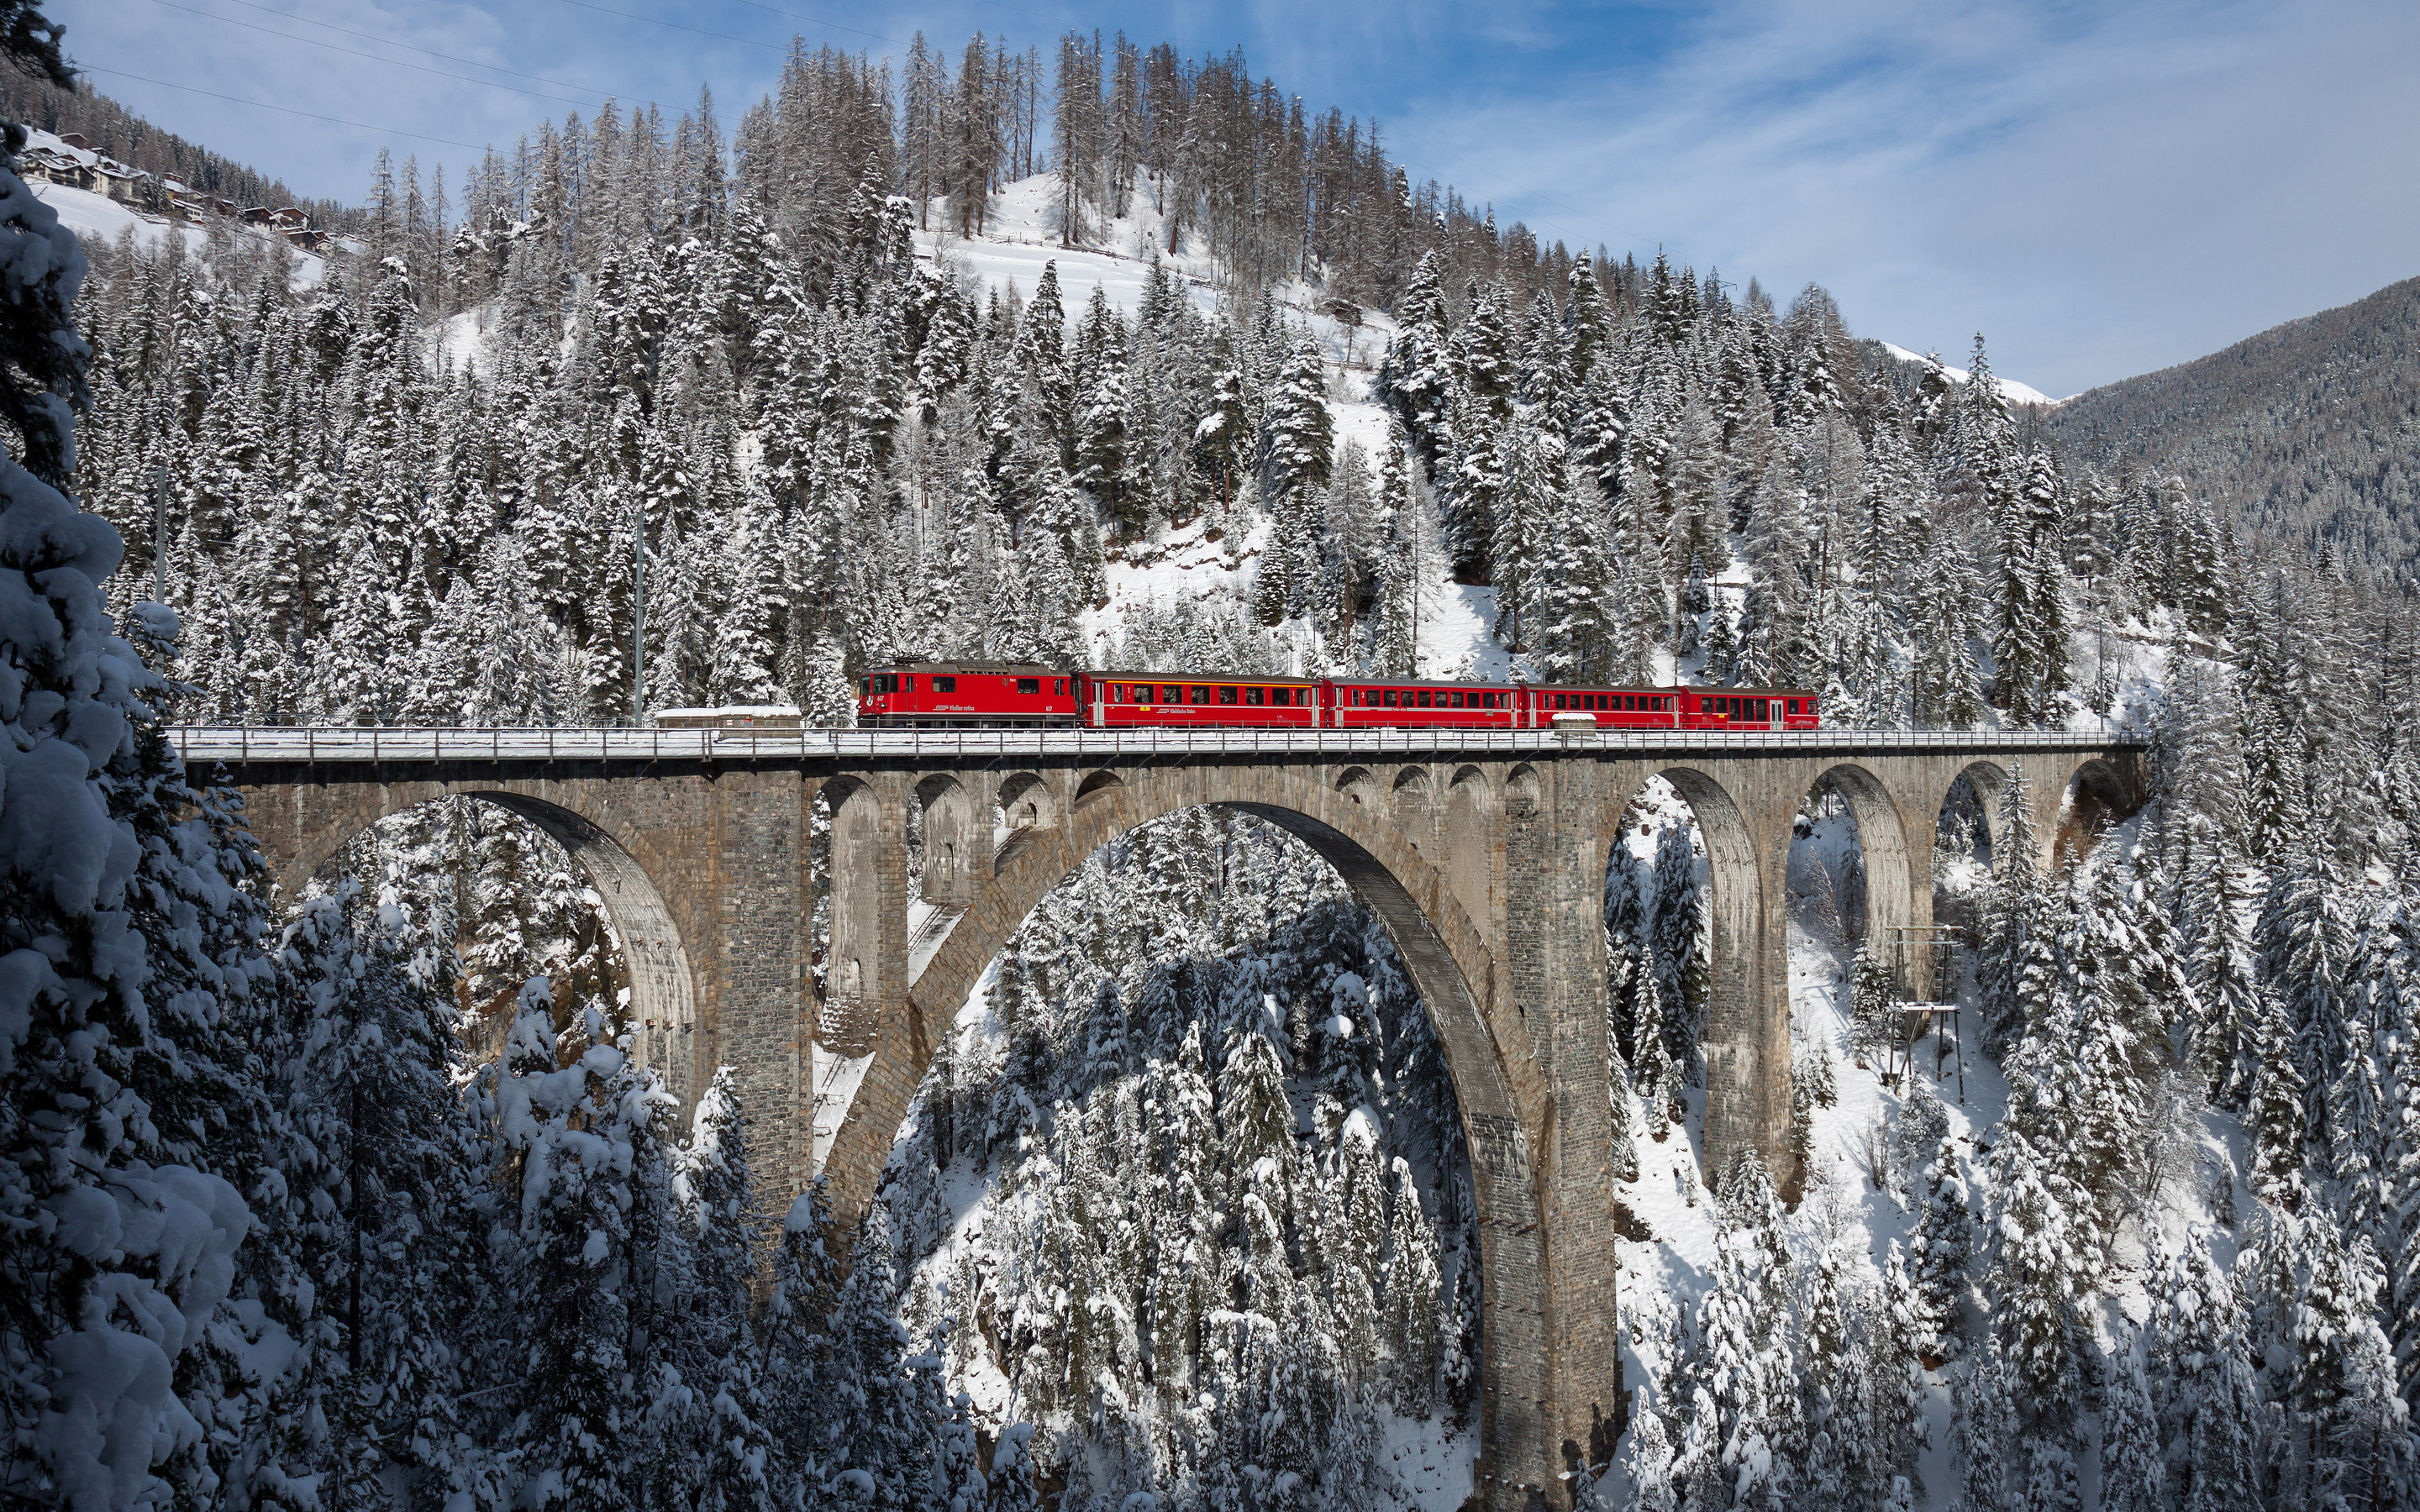 General 2880x1800 landscape Swiss Alps Switzerland train mountains bernina express railway winter bridge